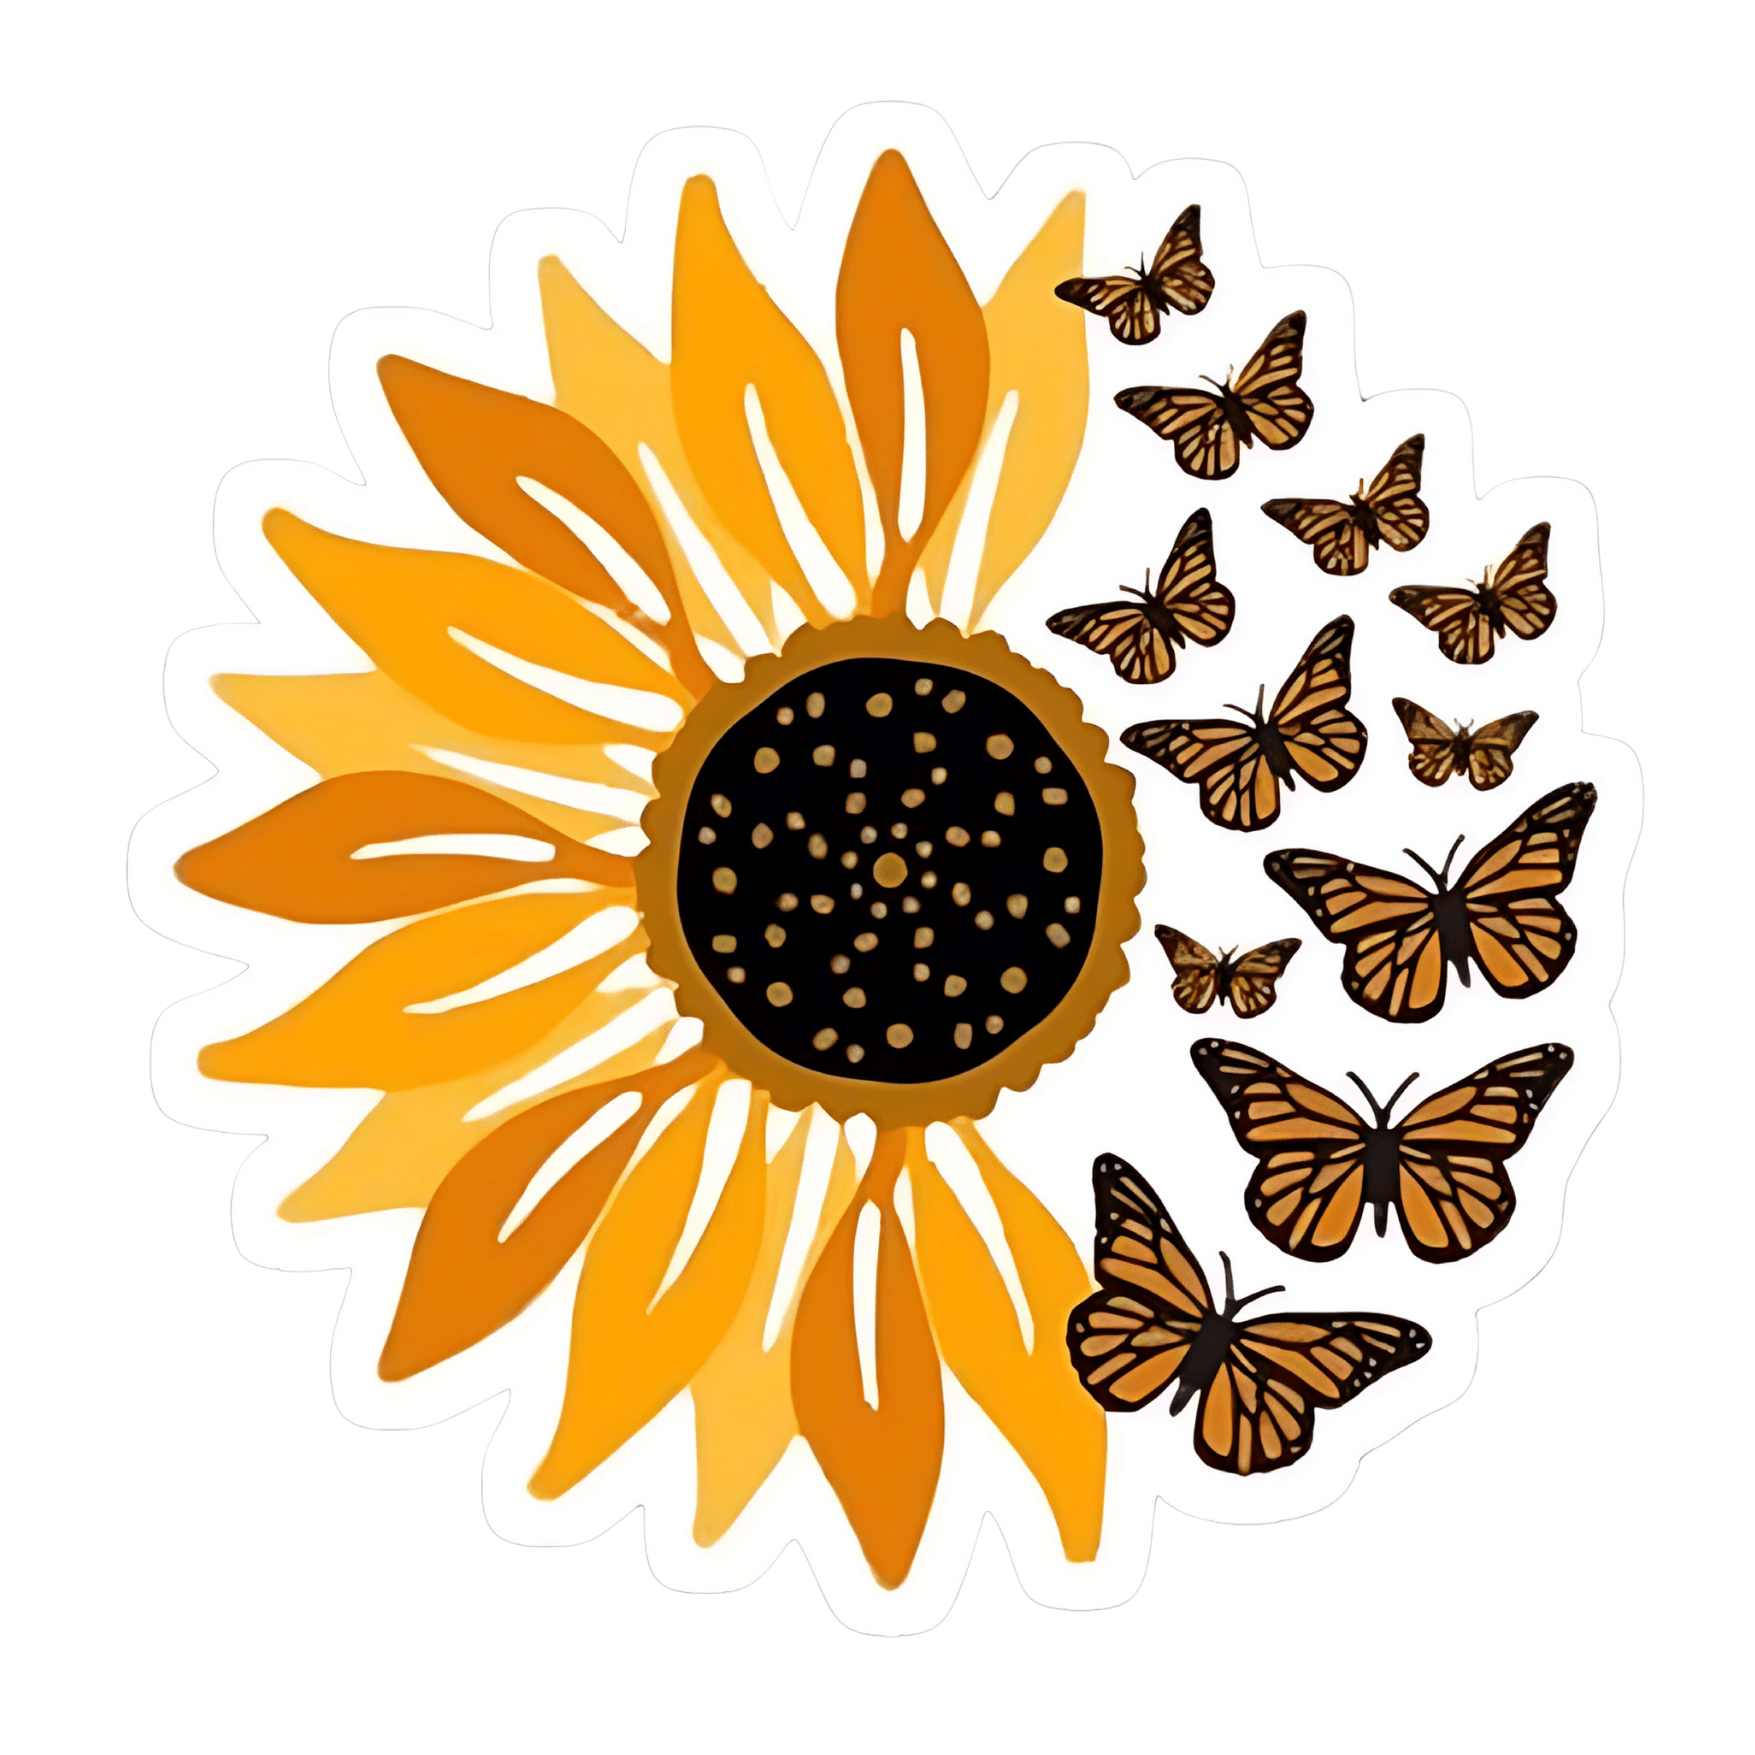 Sunflower and Butterfly sticker 6cm